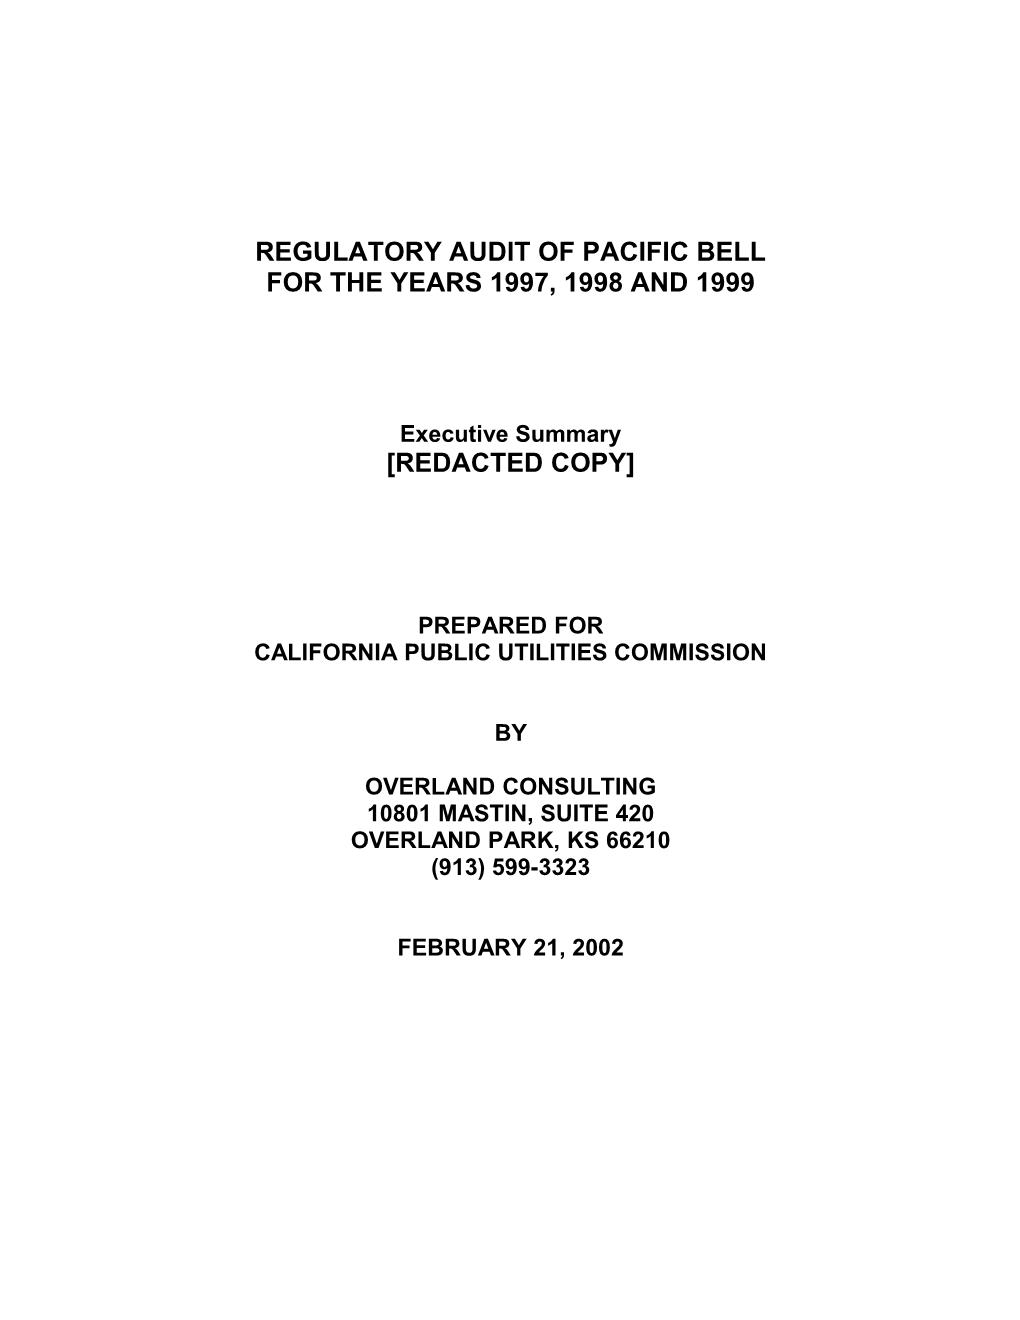 Regulatory Audit of Pacific Bell